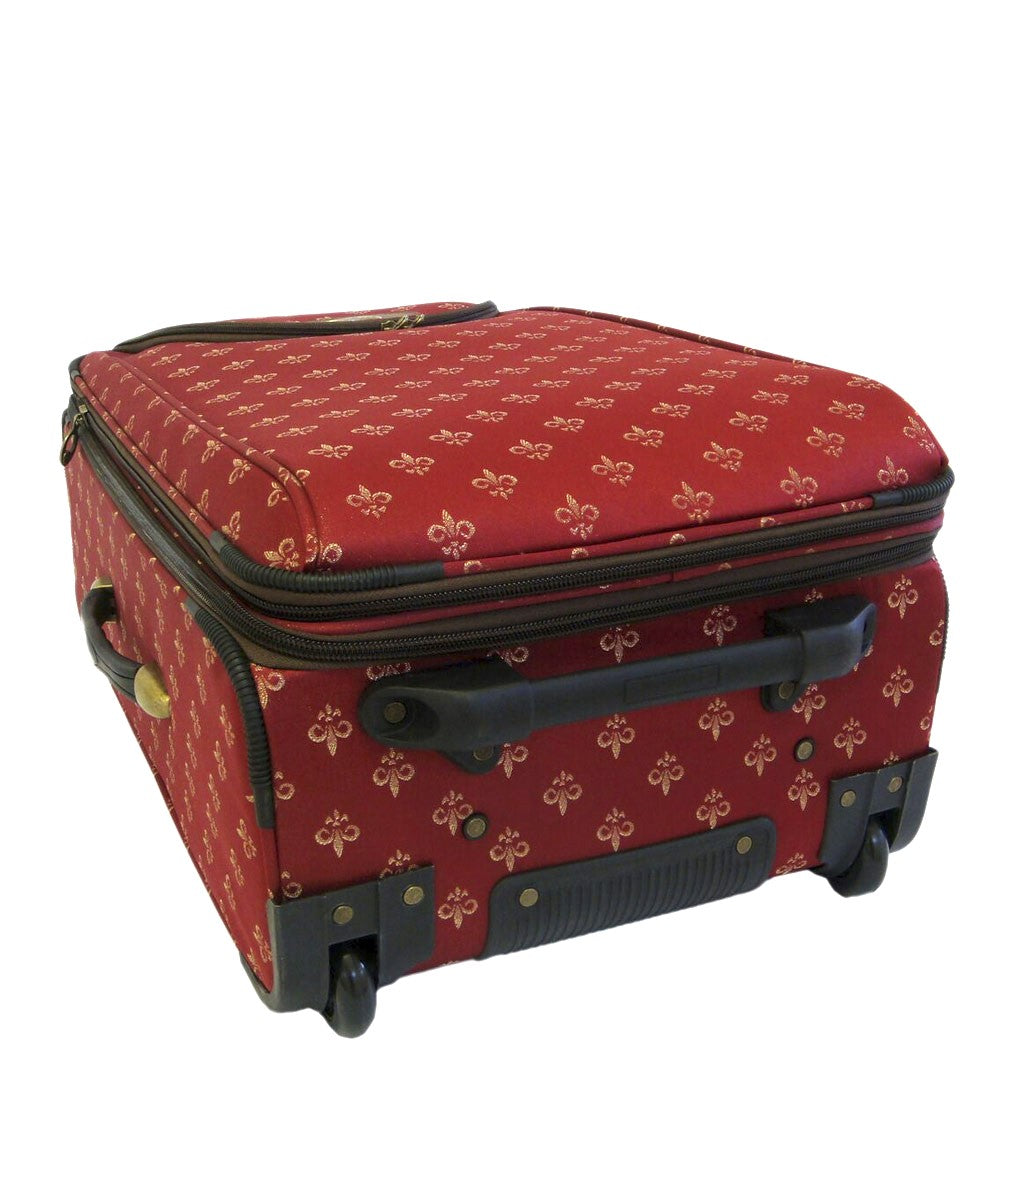 American Flyer Fleur-de-Lis 4-Piece Luggage Set